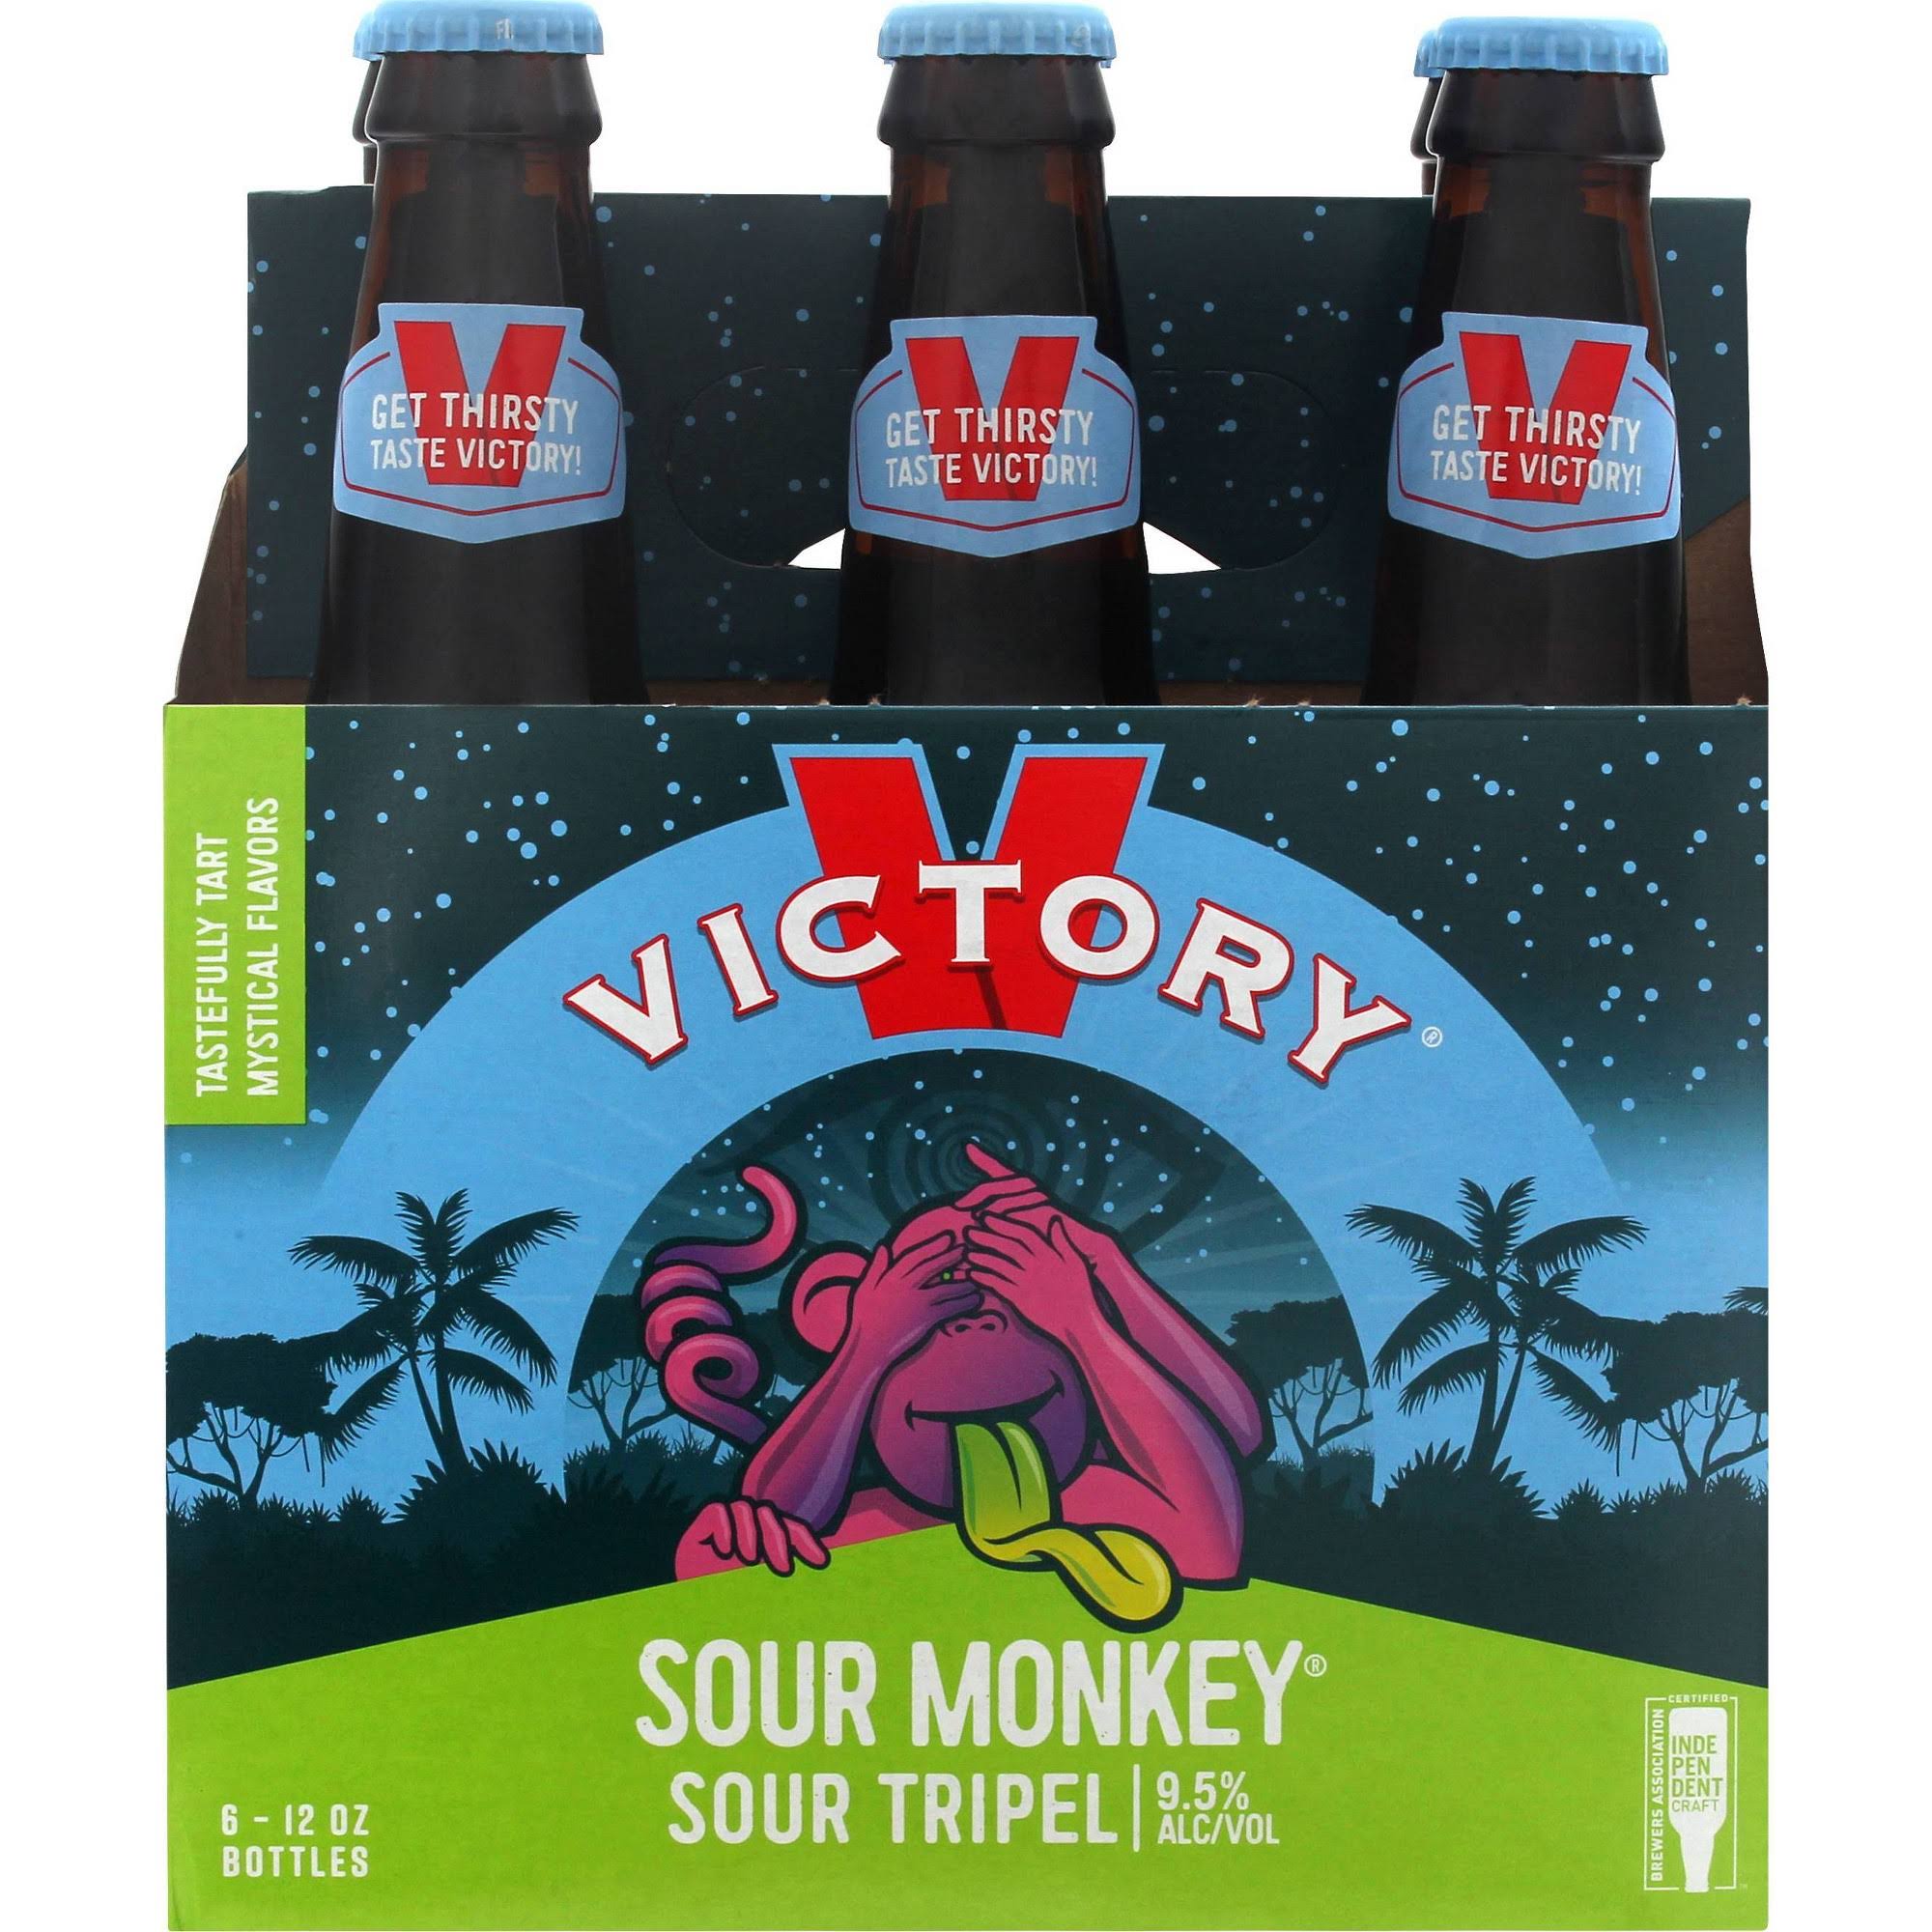 Victory Beer, Sour Monkey, Sour Tripel - 6 pack, 12 oz bottles